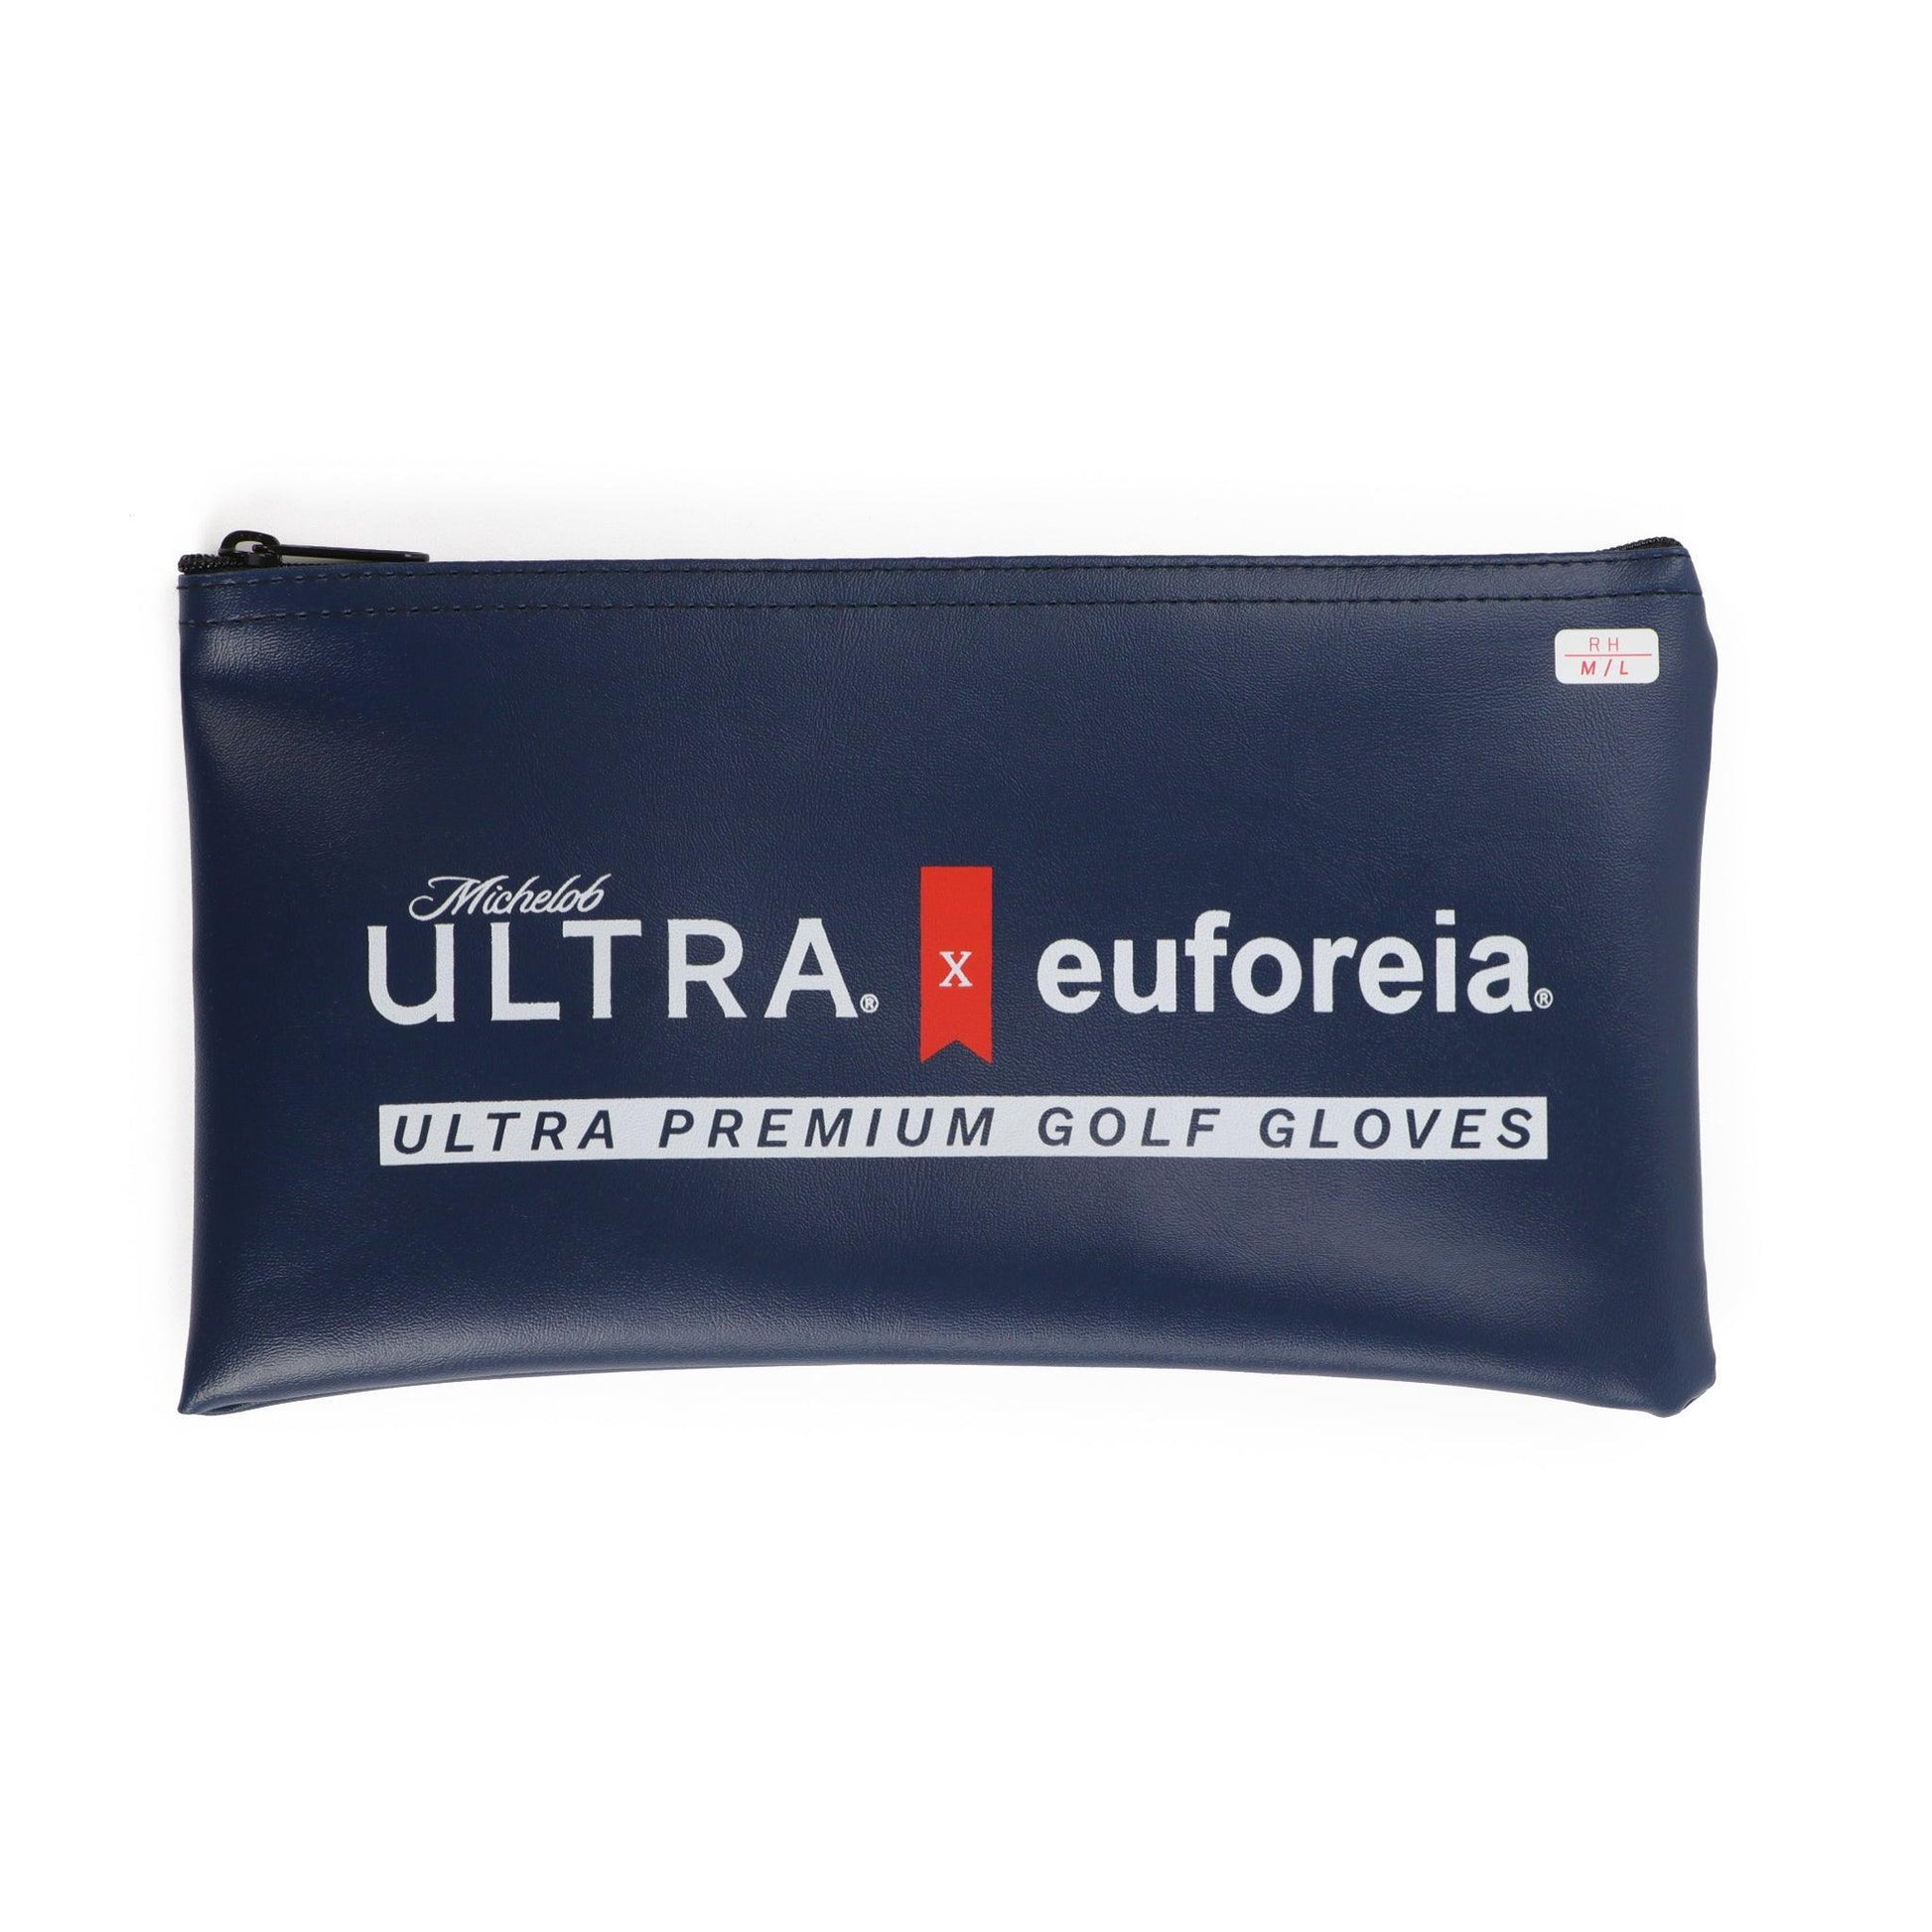 Michelob ULTRA Euforeia Primo Golf Glove Bag